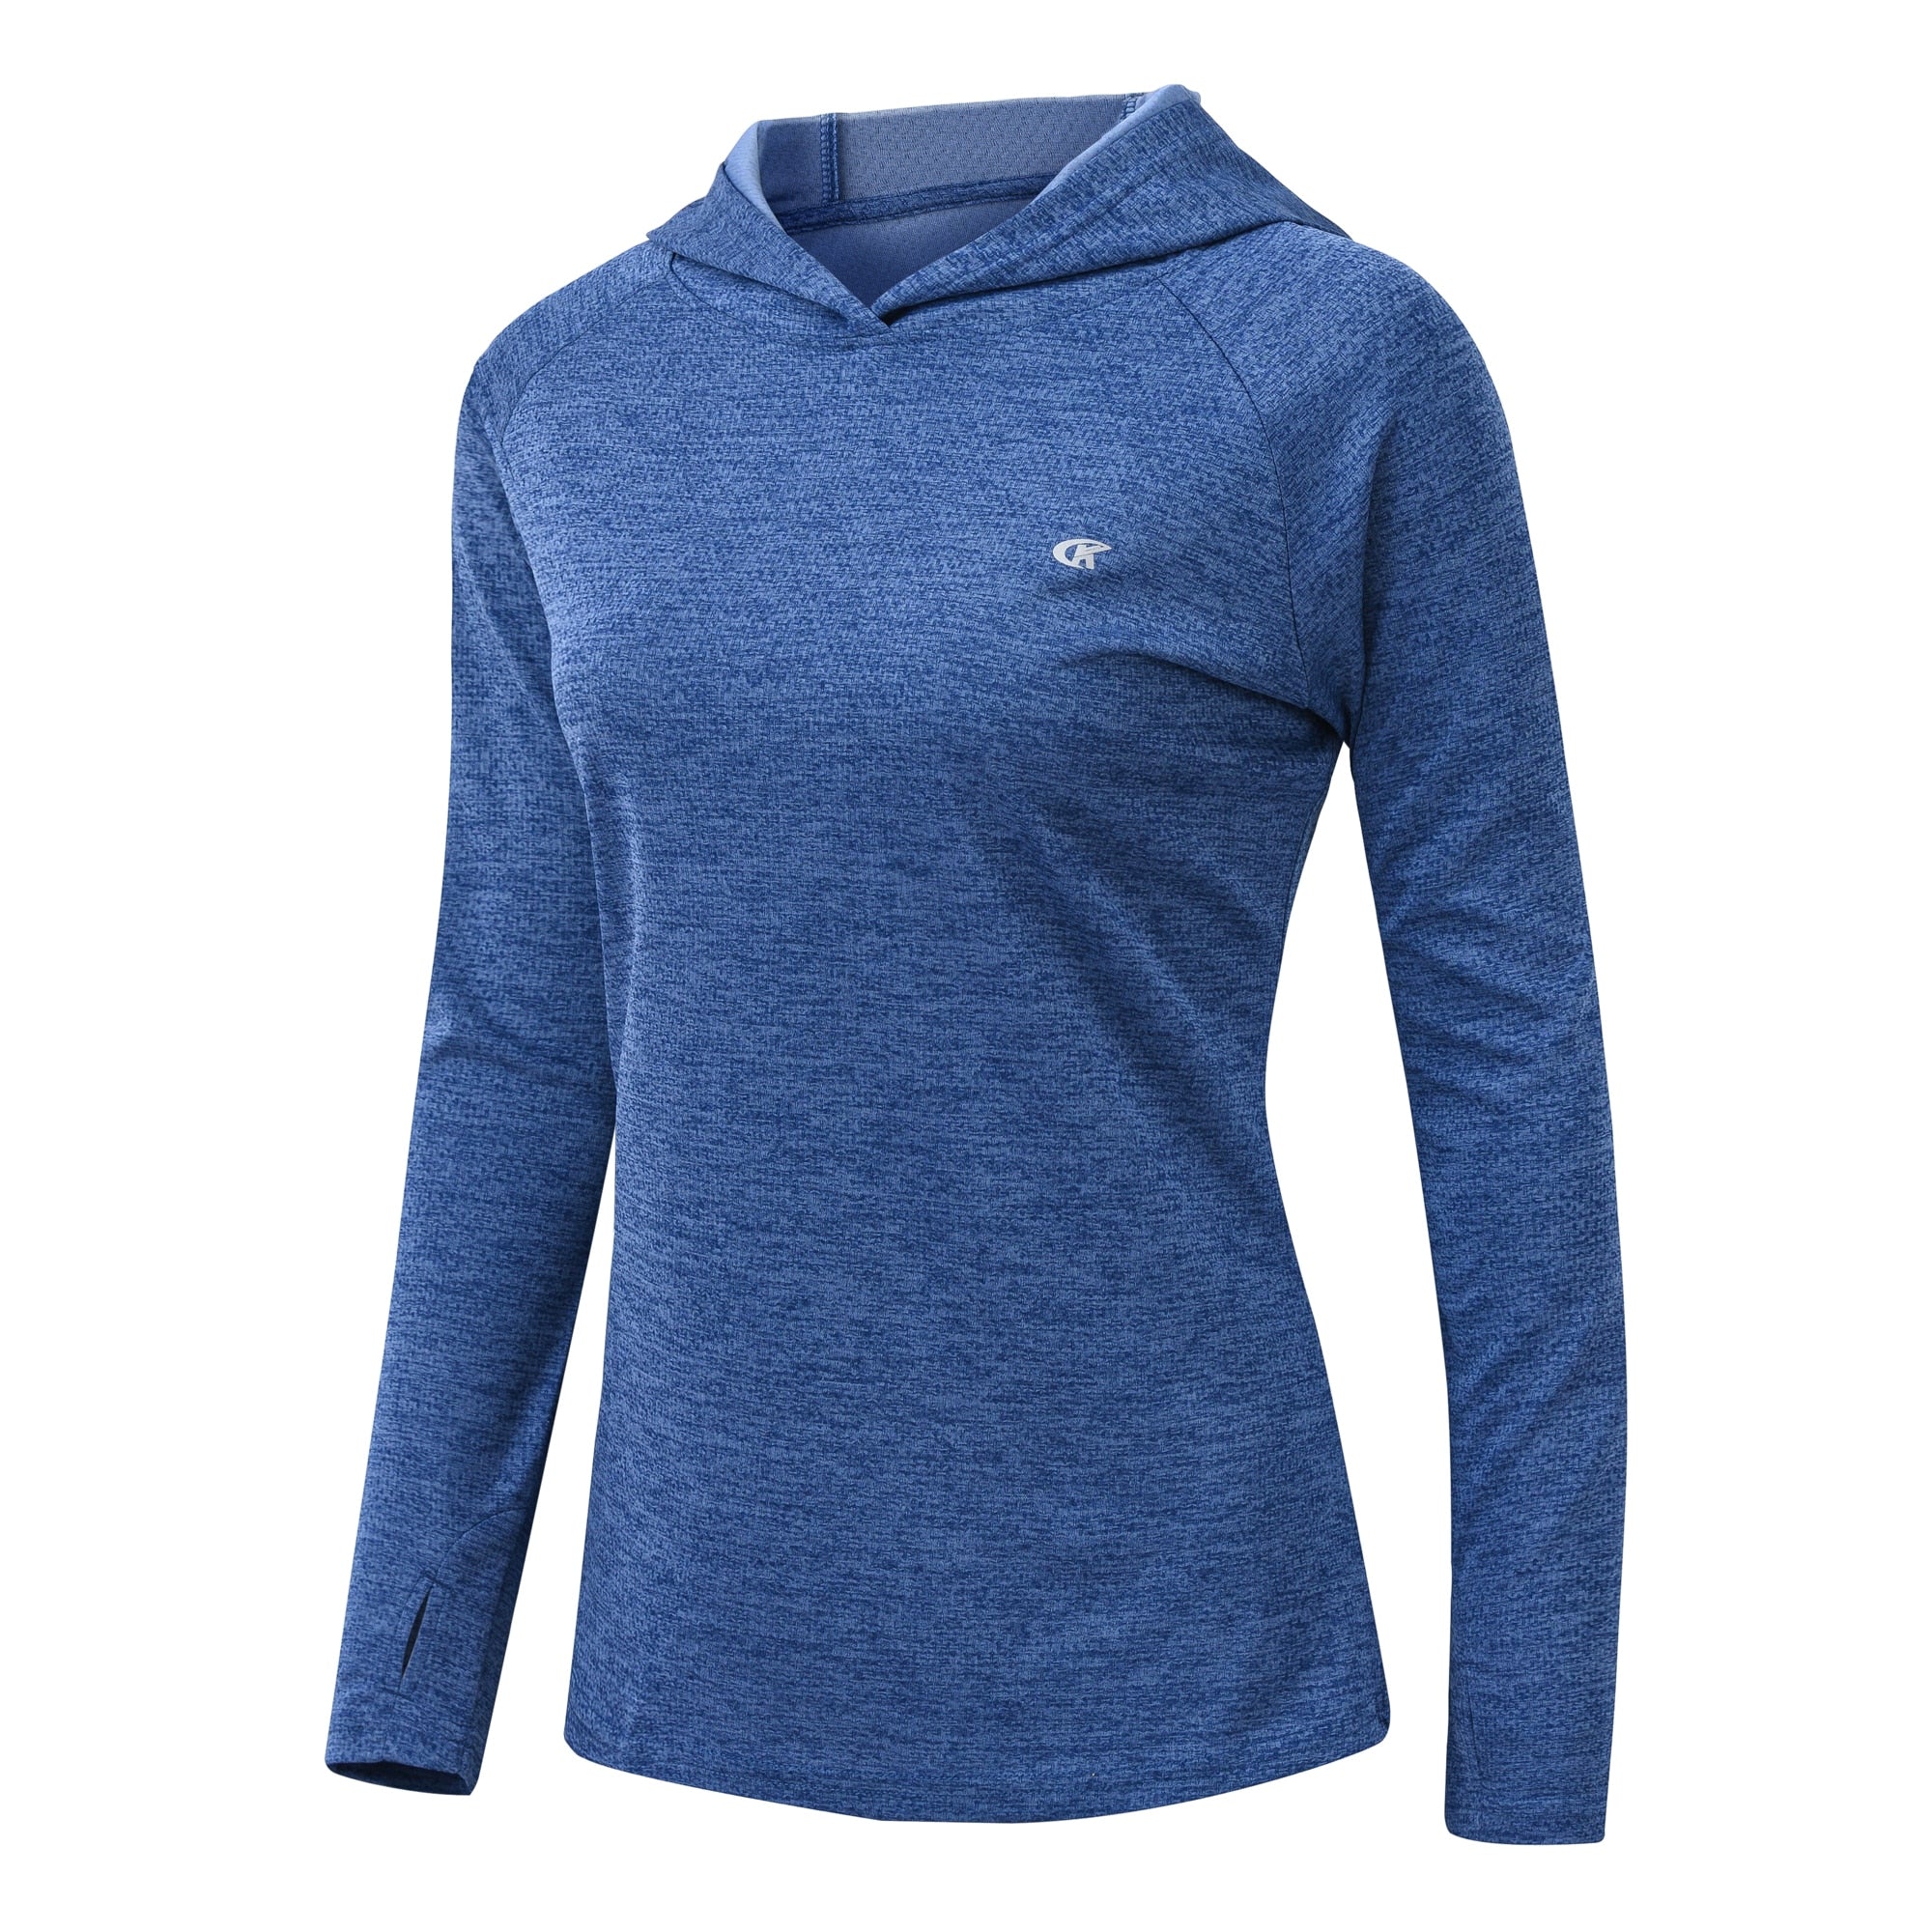 Hiking and Running Long Sleeve T-Shirt Rash Guard UPF 50+ Quick Dry Lightweight For women